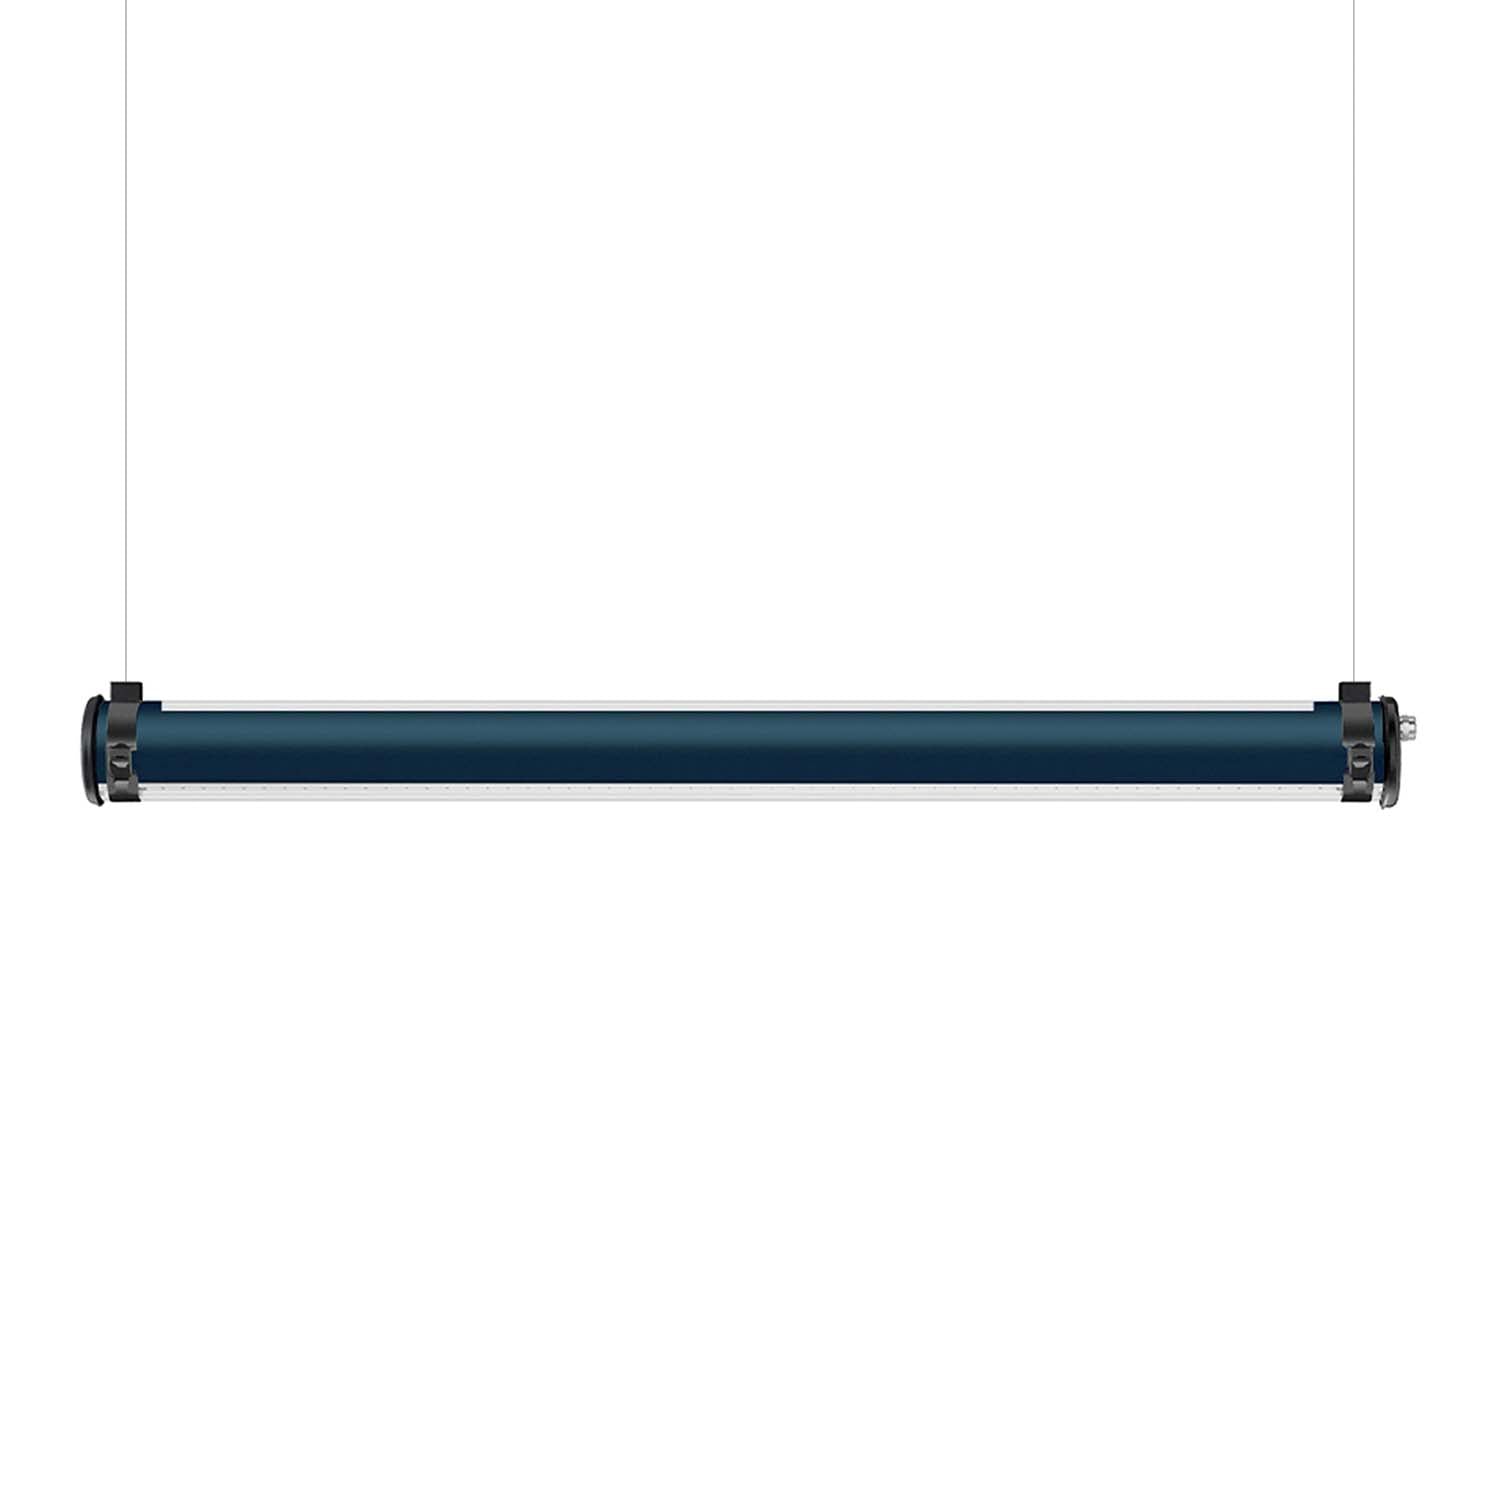 BRUEGHEL D/I - Suspension tube en acier style industriel étanche IP68